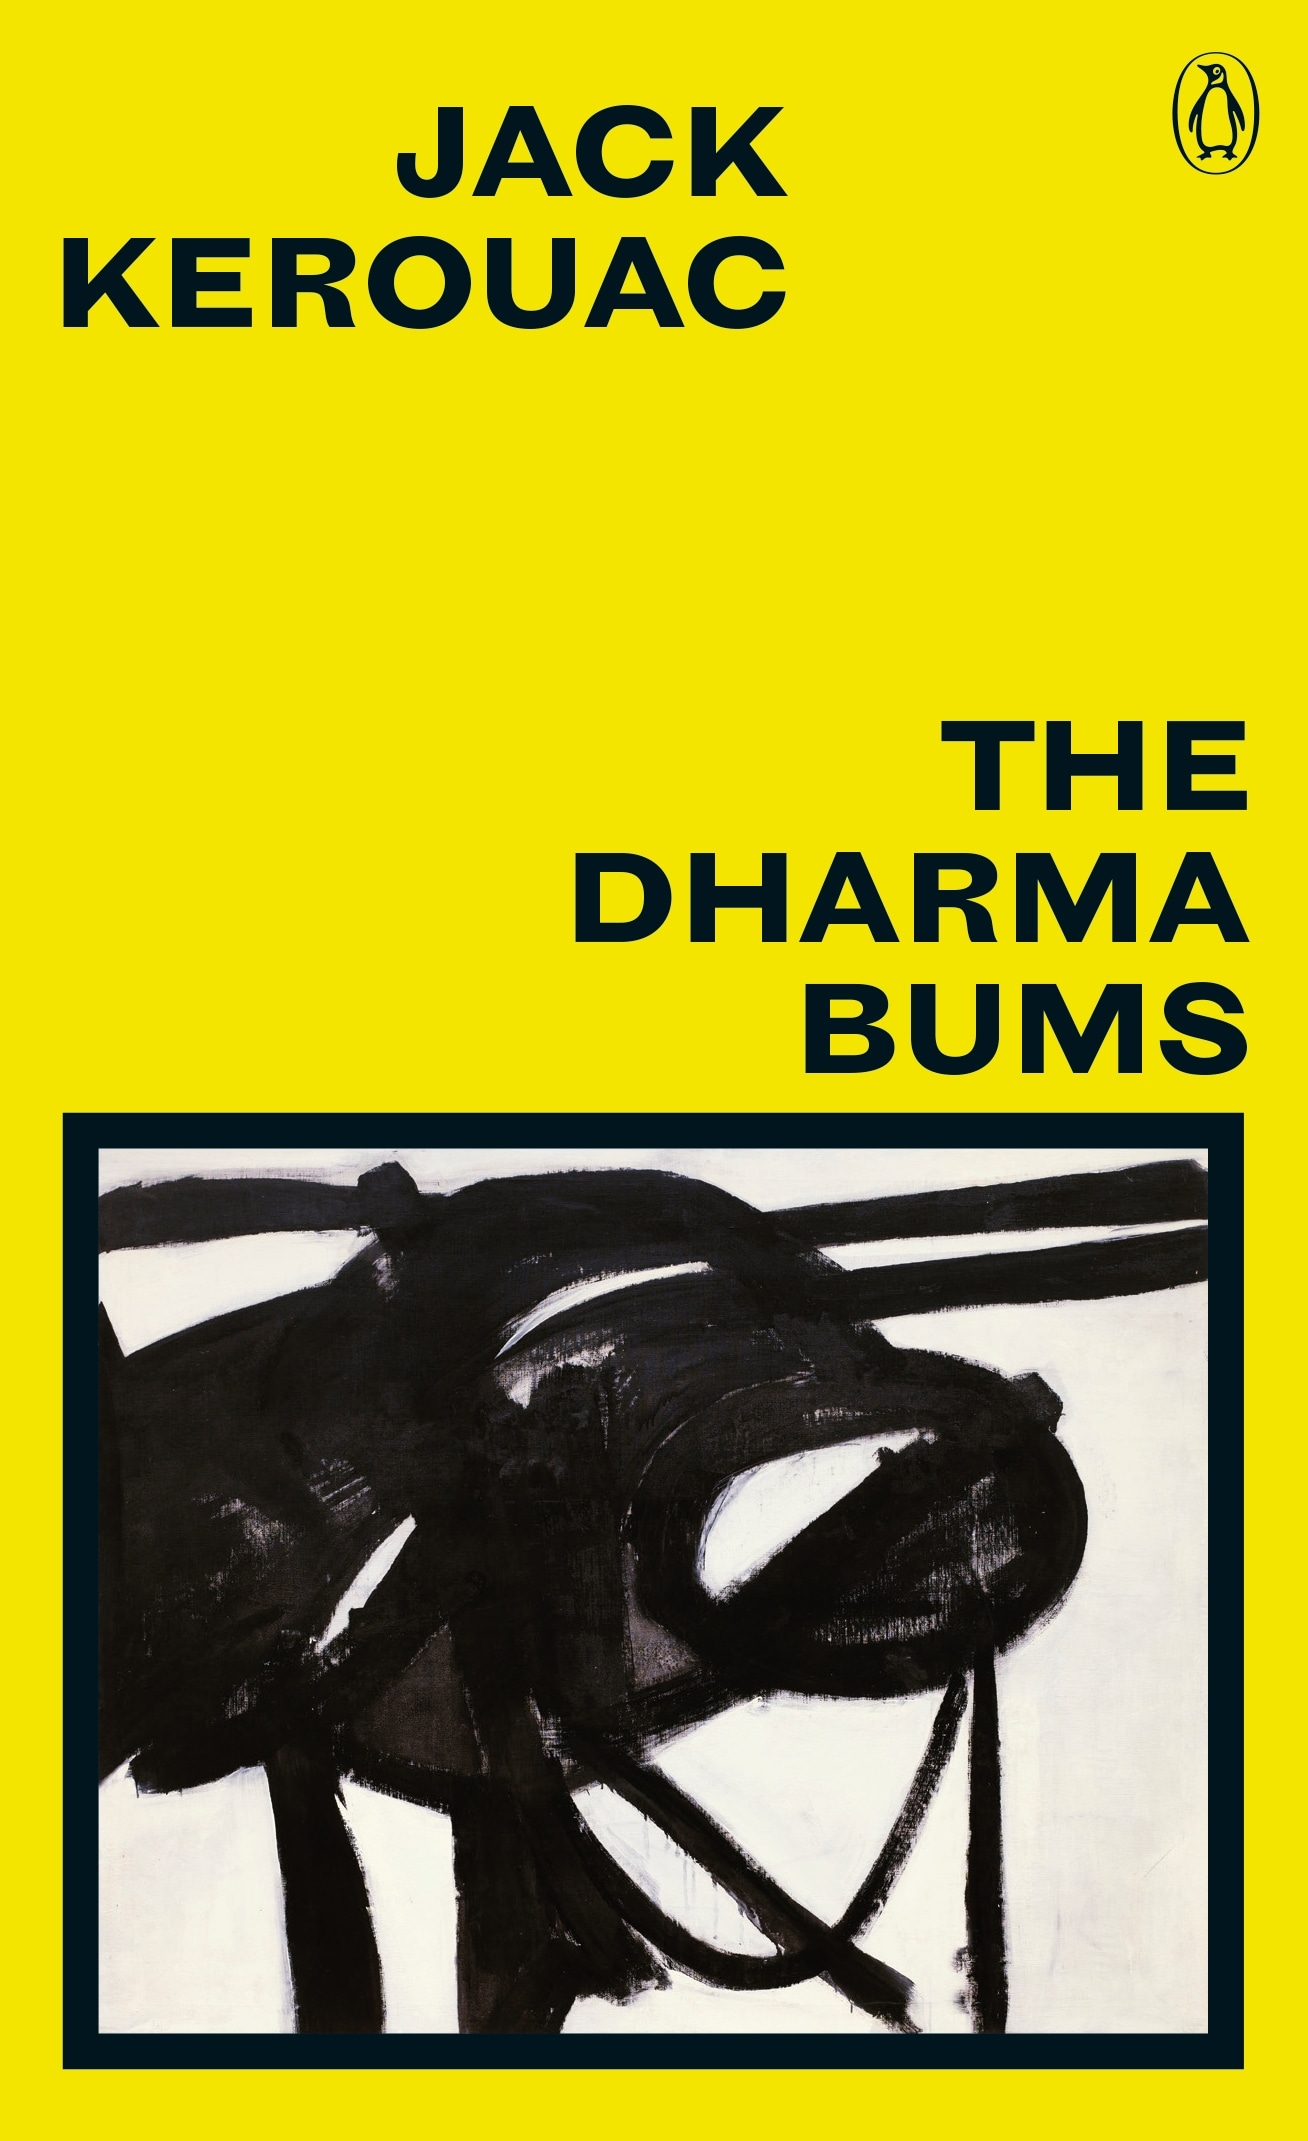 Book “The Dharma Bums” by Jack Kerouac, Ann Douglas — August 2, 2018